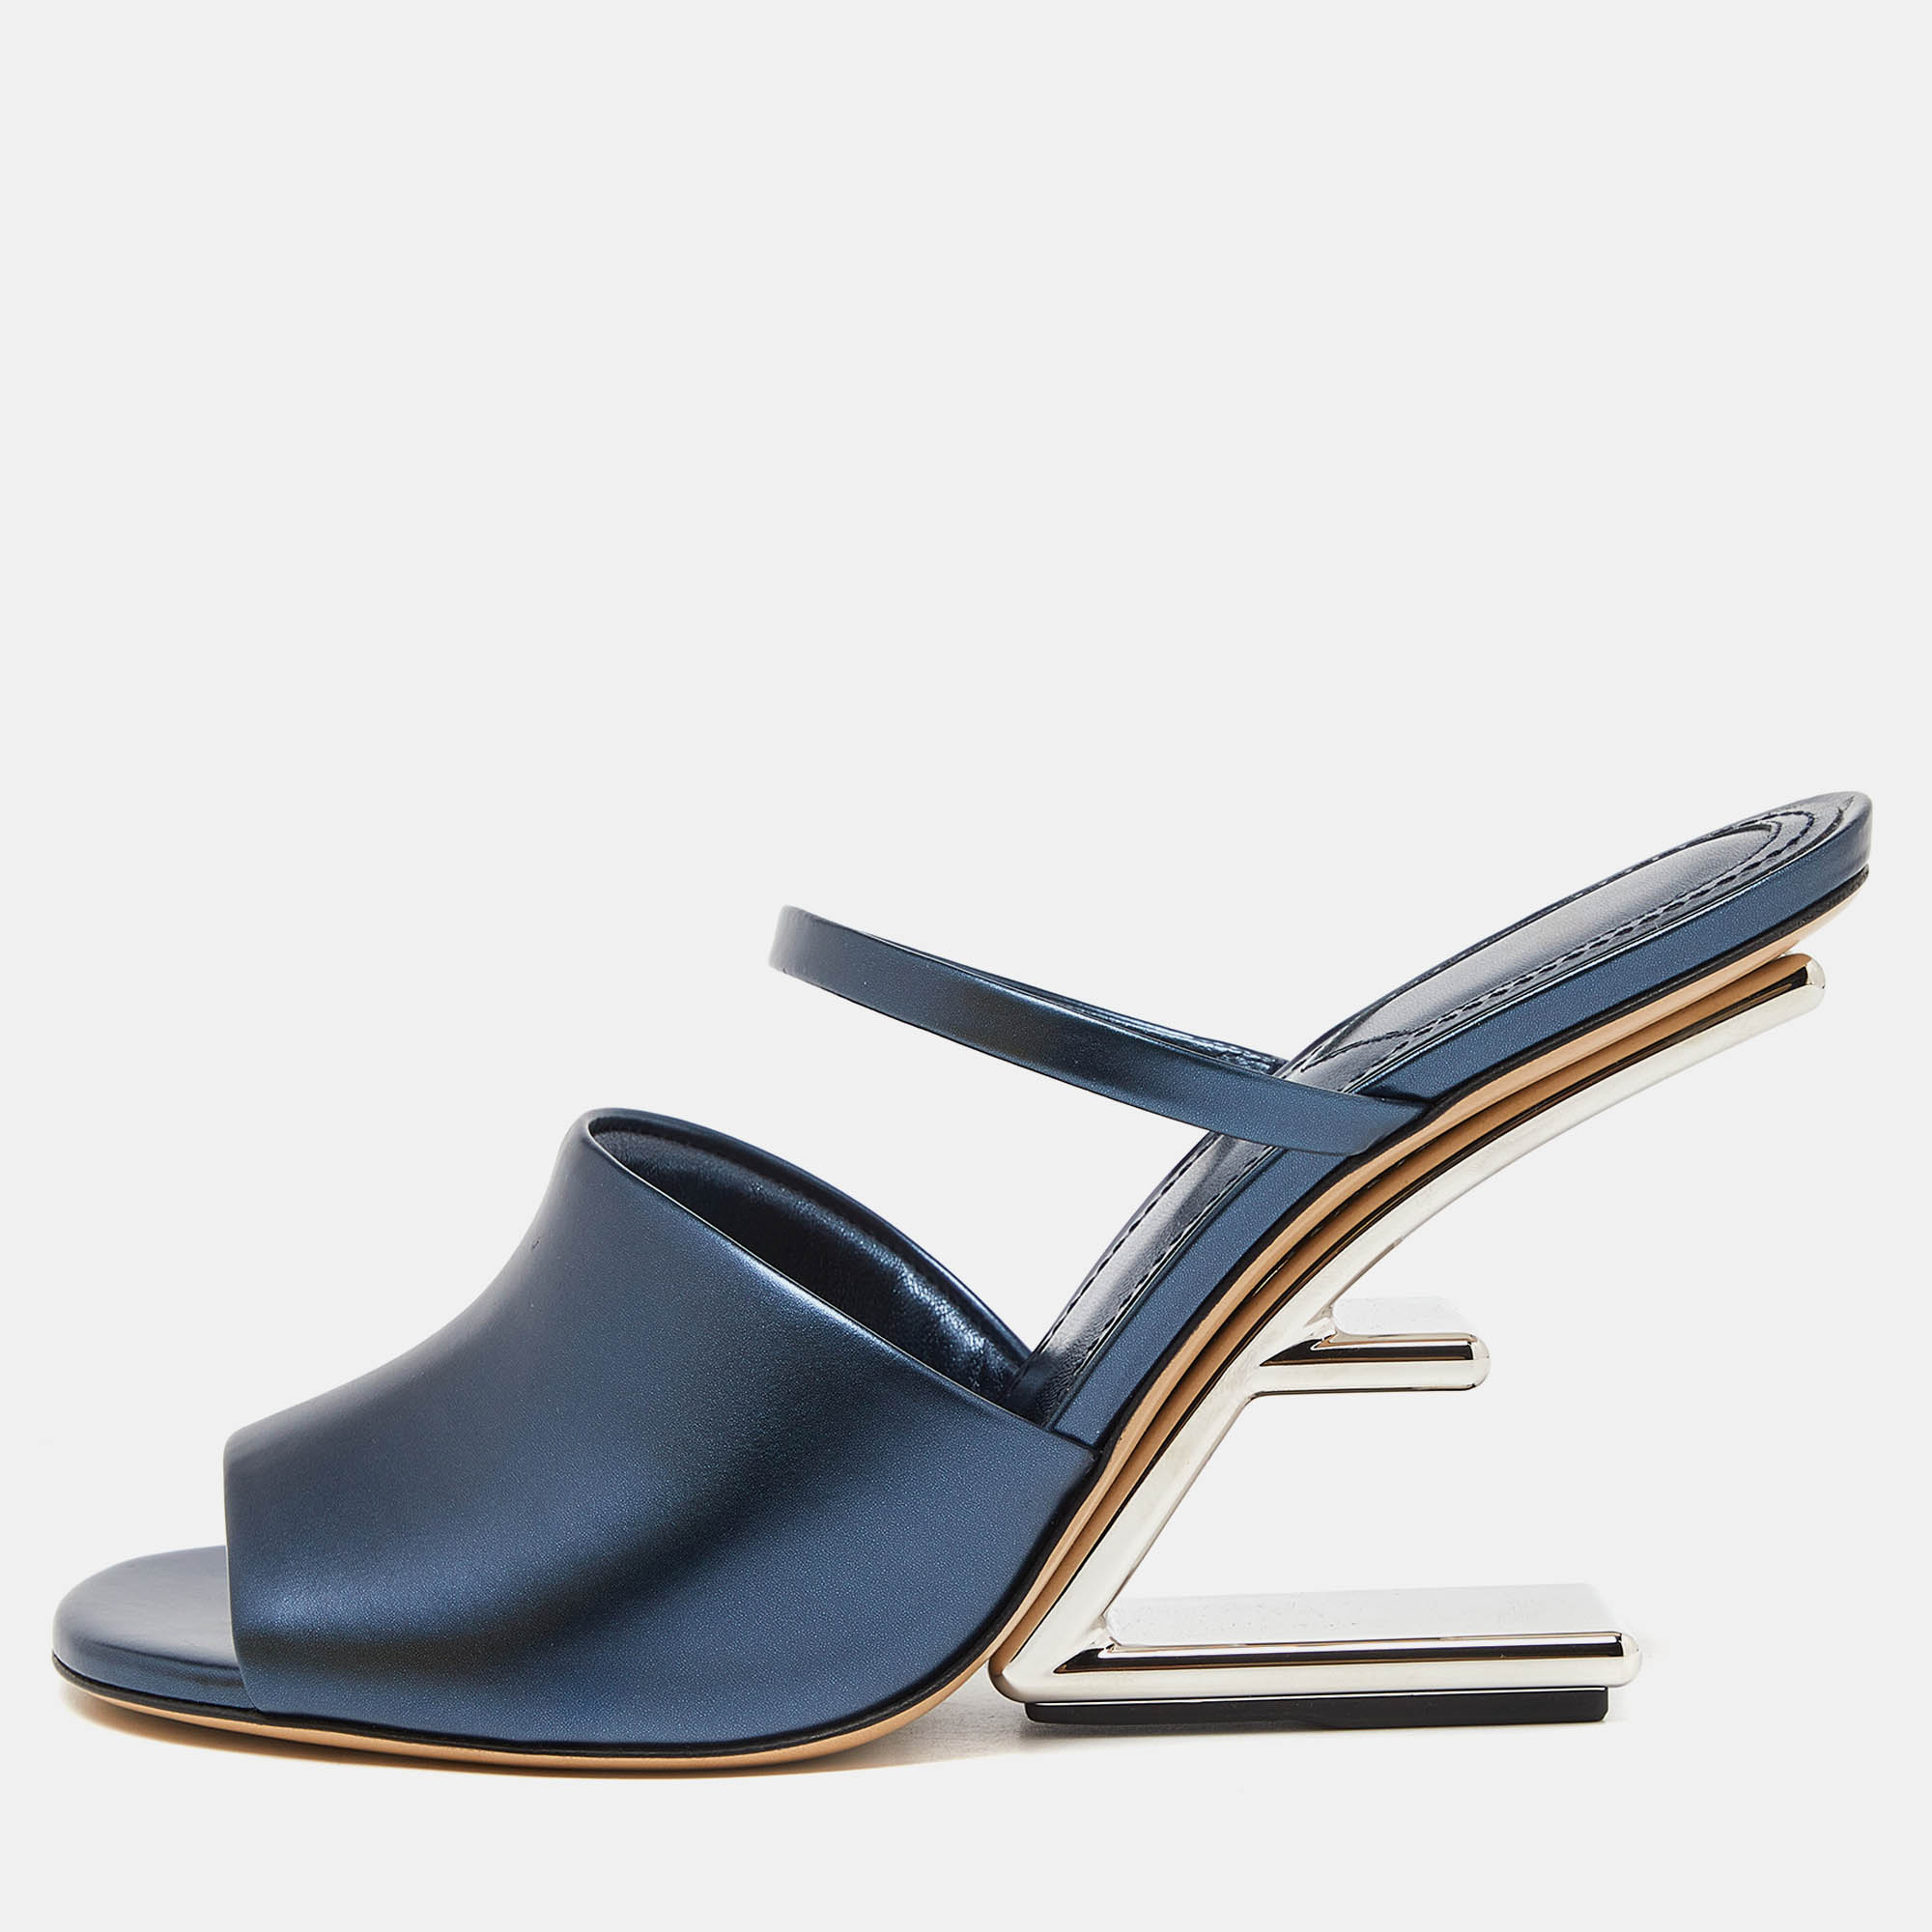 Fendi metallic blue leather fendi first slide sandals size 39